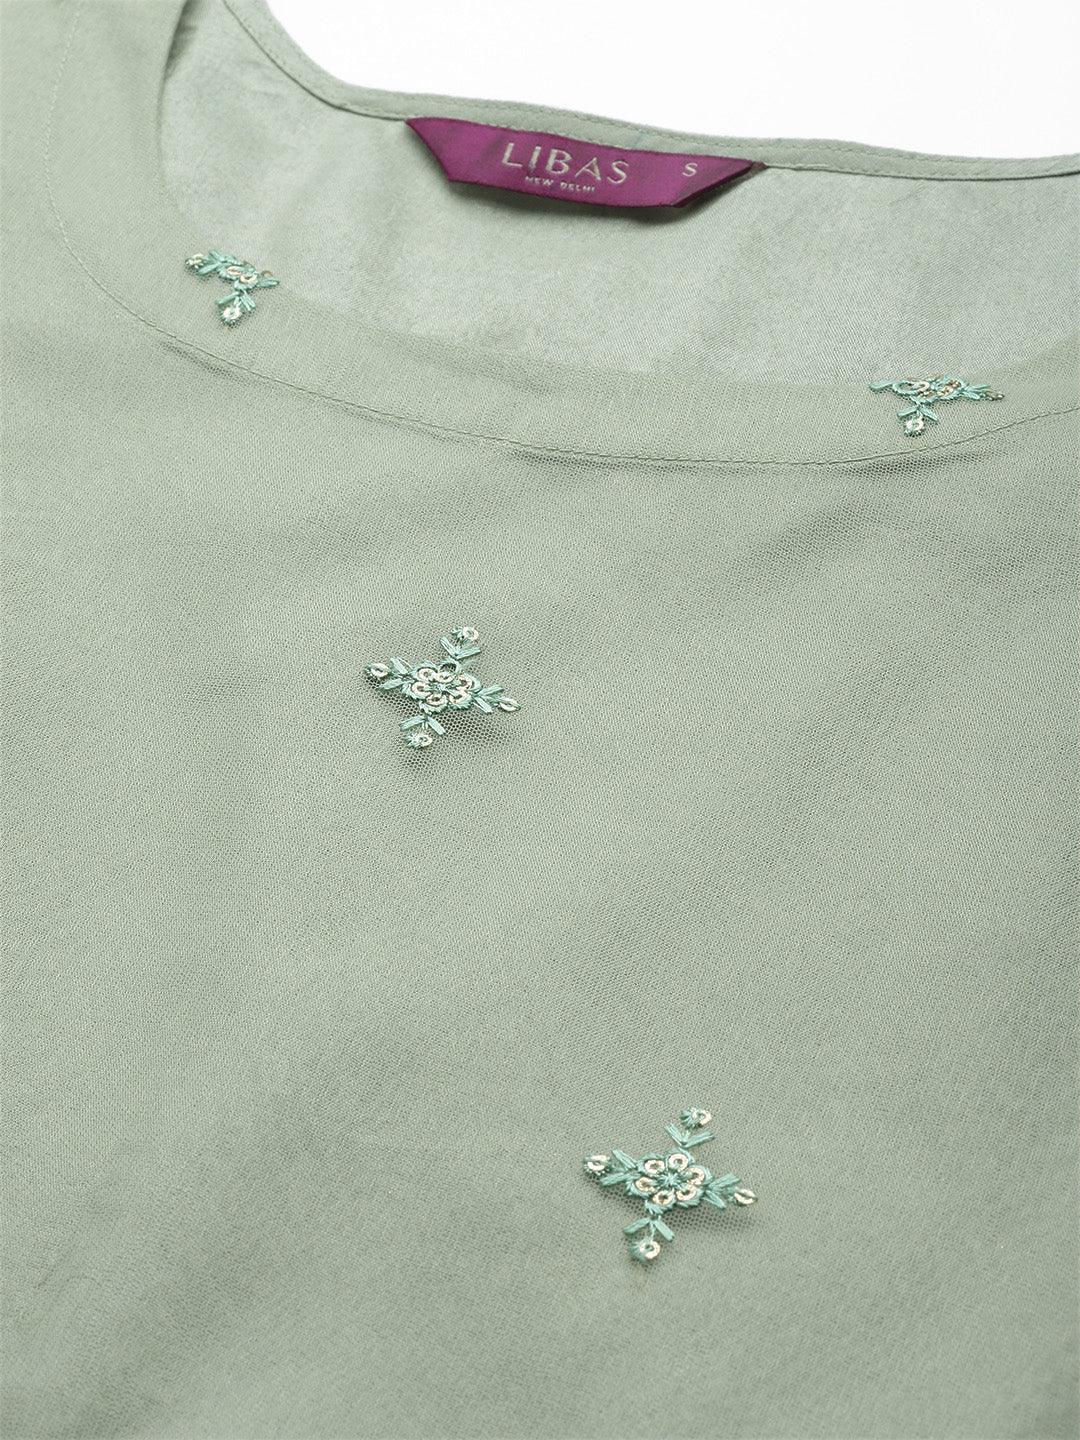 Green Embroidered Net Straight Kurta With Skirt & Dupatta